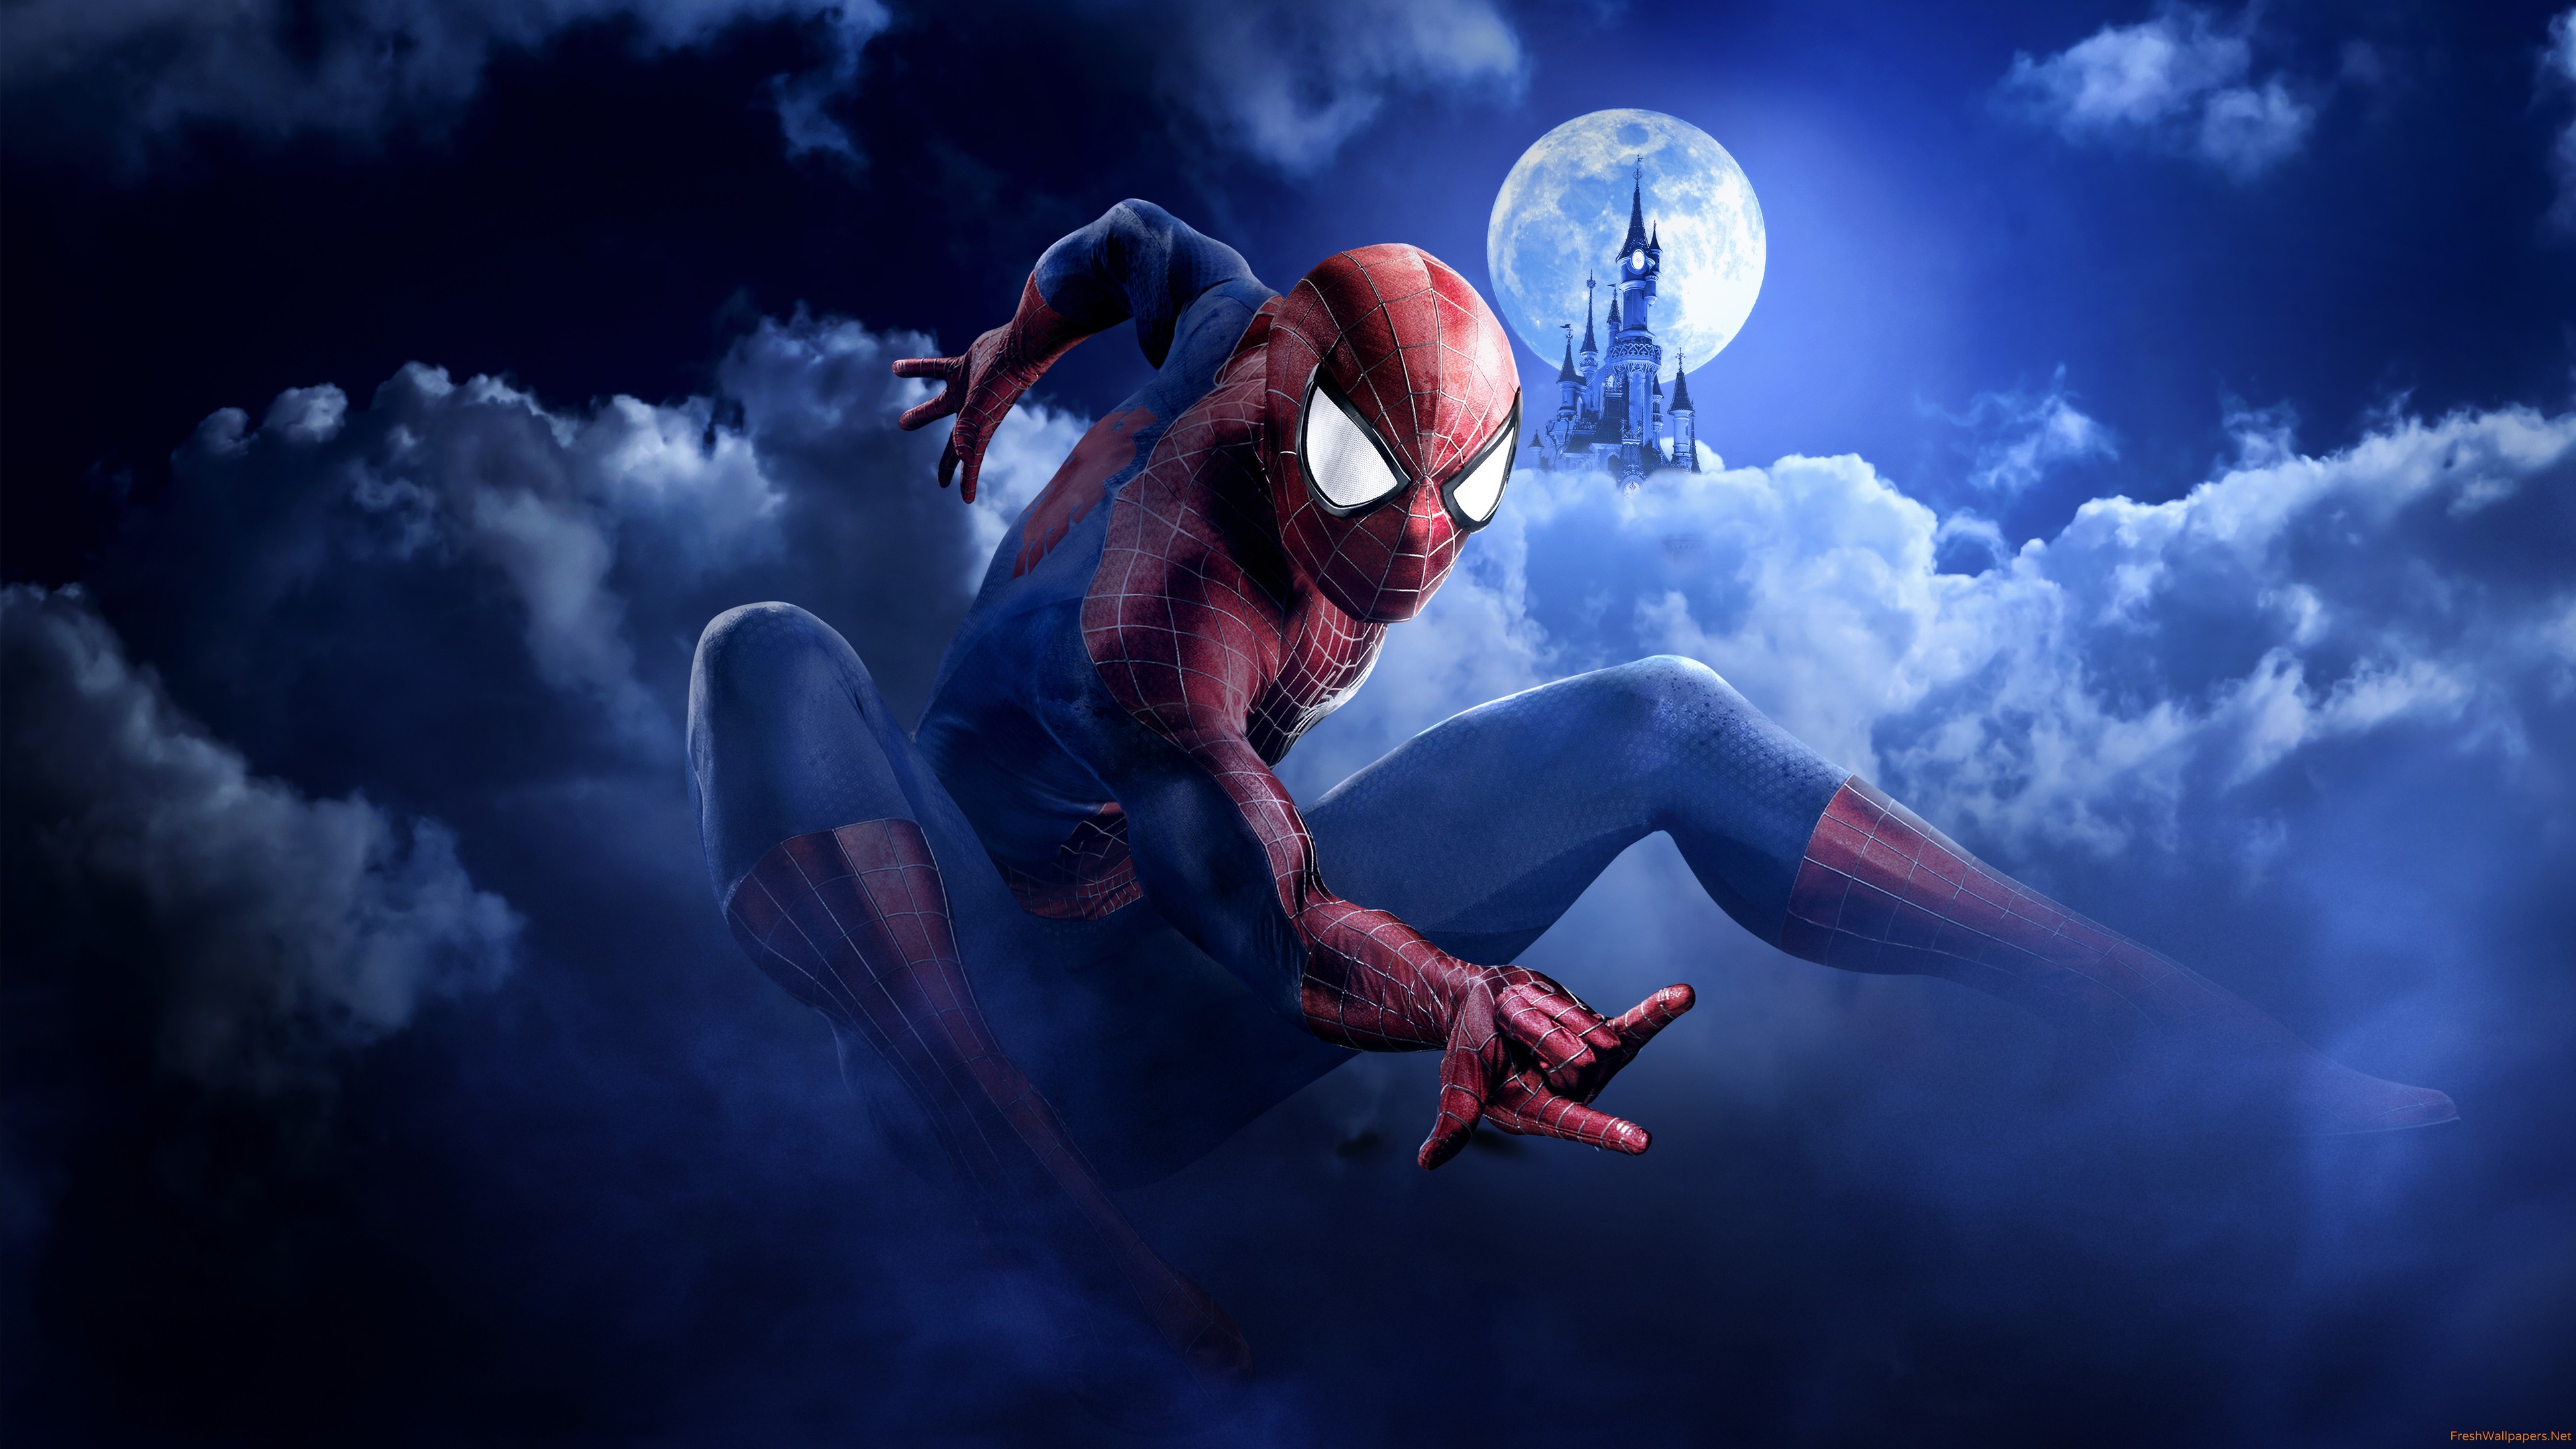 Spider Man 4K Wallpaper For Desktop